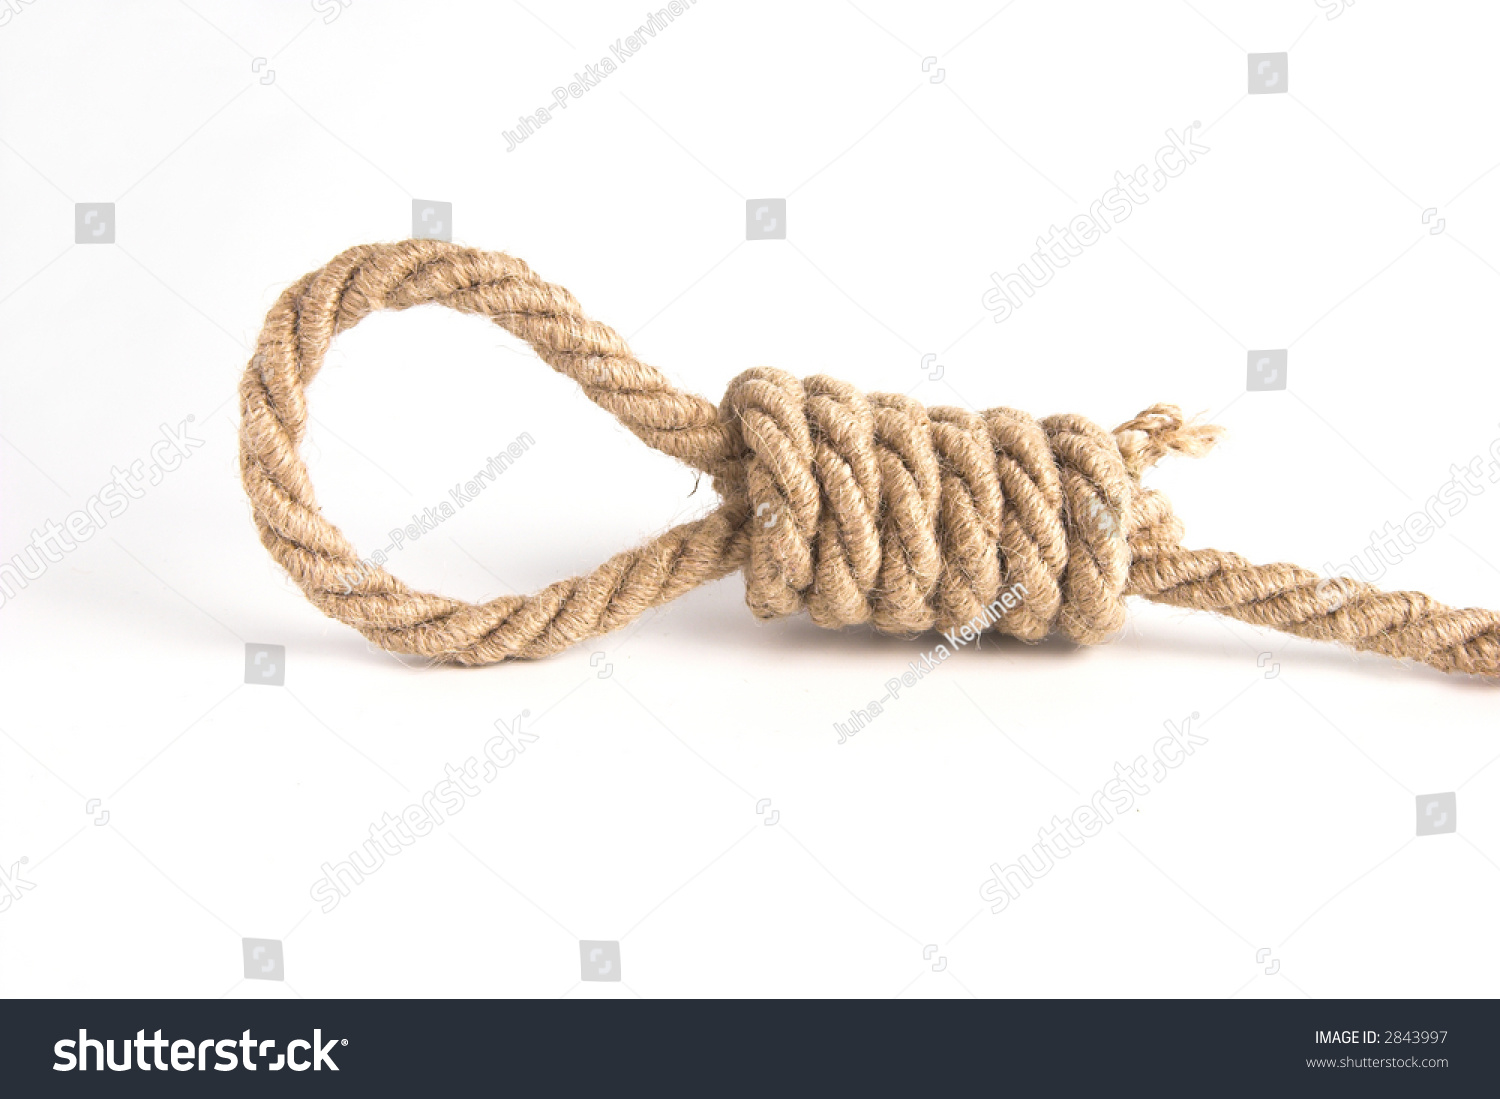 Hanging Noose Stock Photo 2843997 : Shutterstock